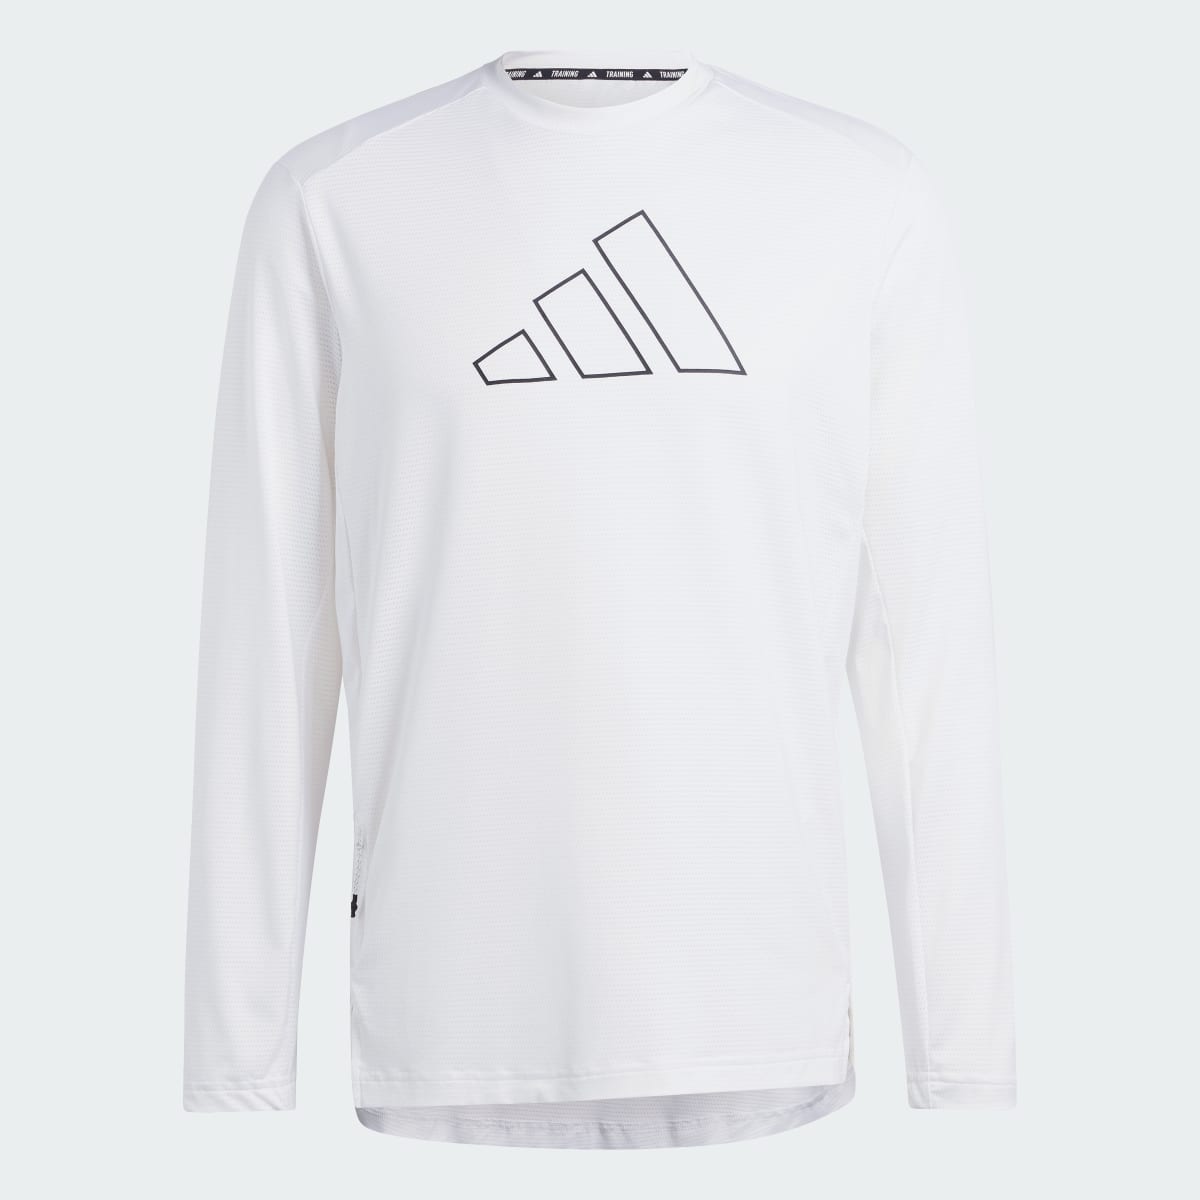 Adidas Train Icons Small Logo Long Sleeve Training Tee. 6